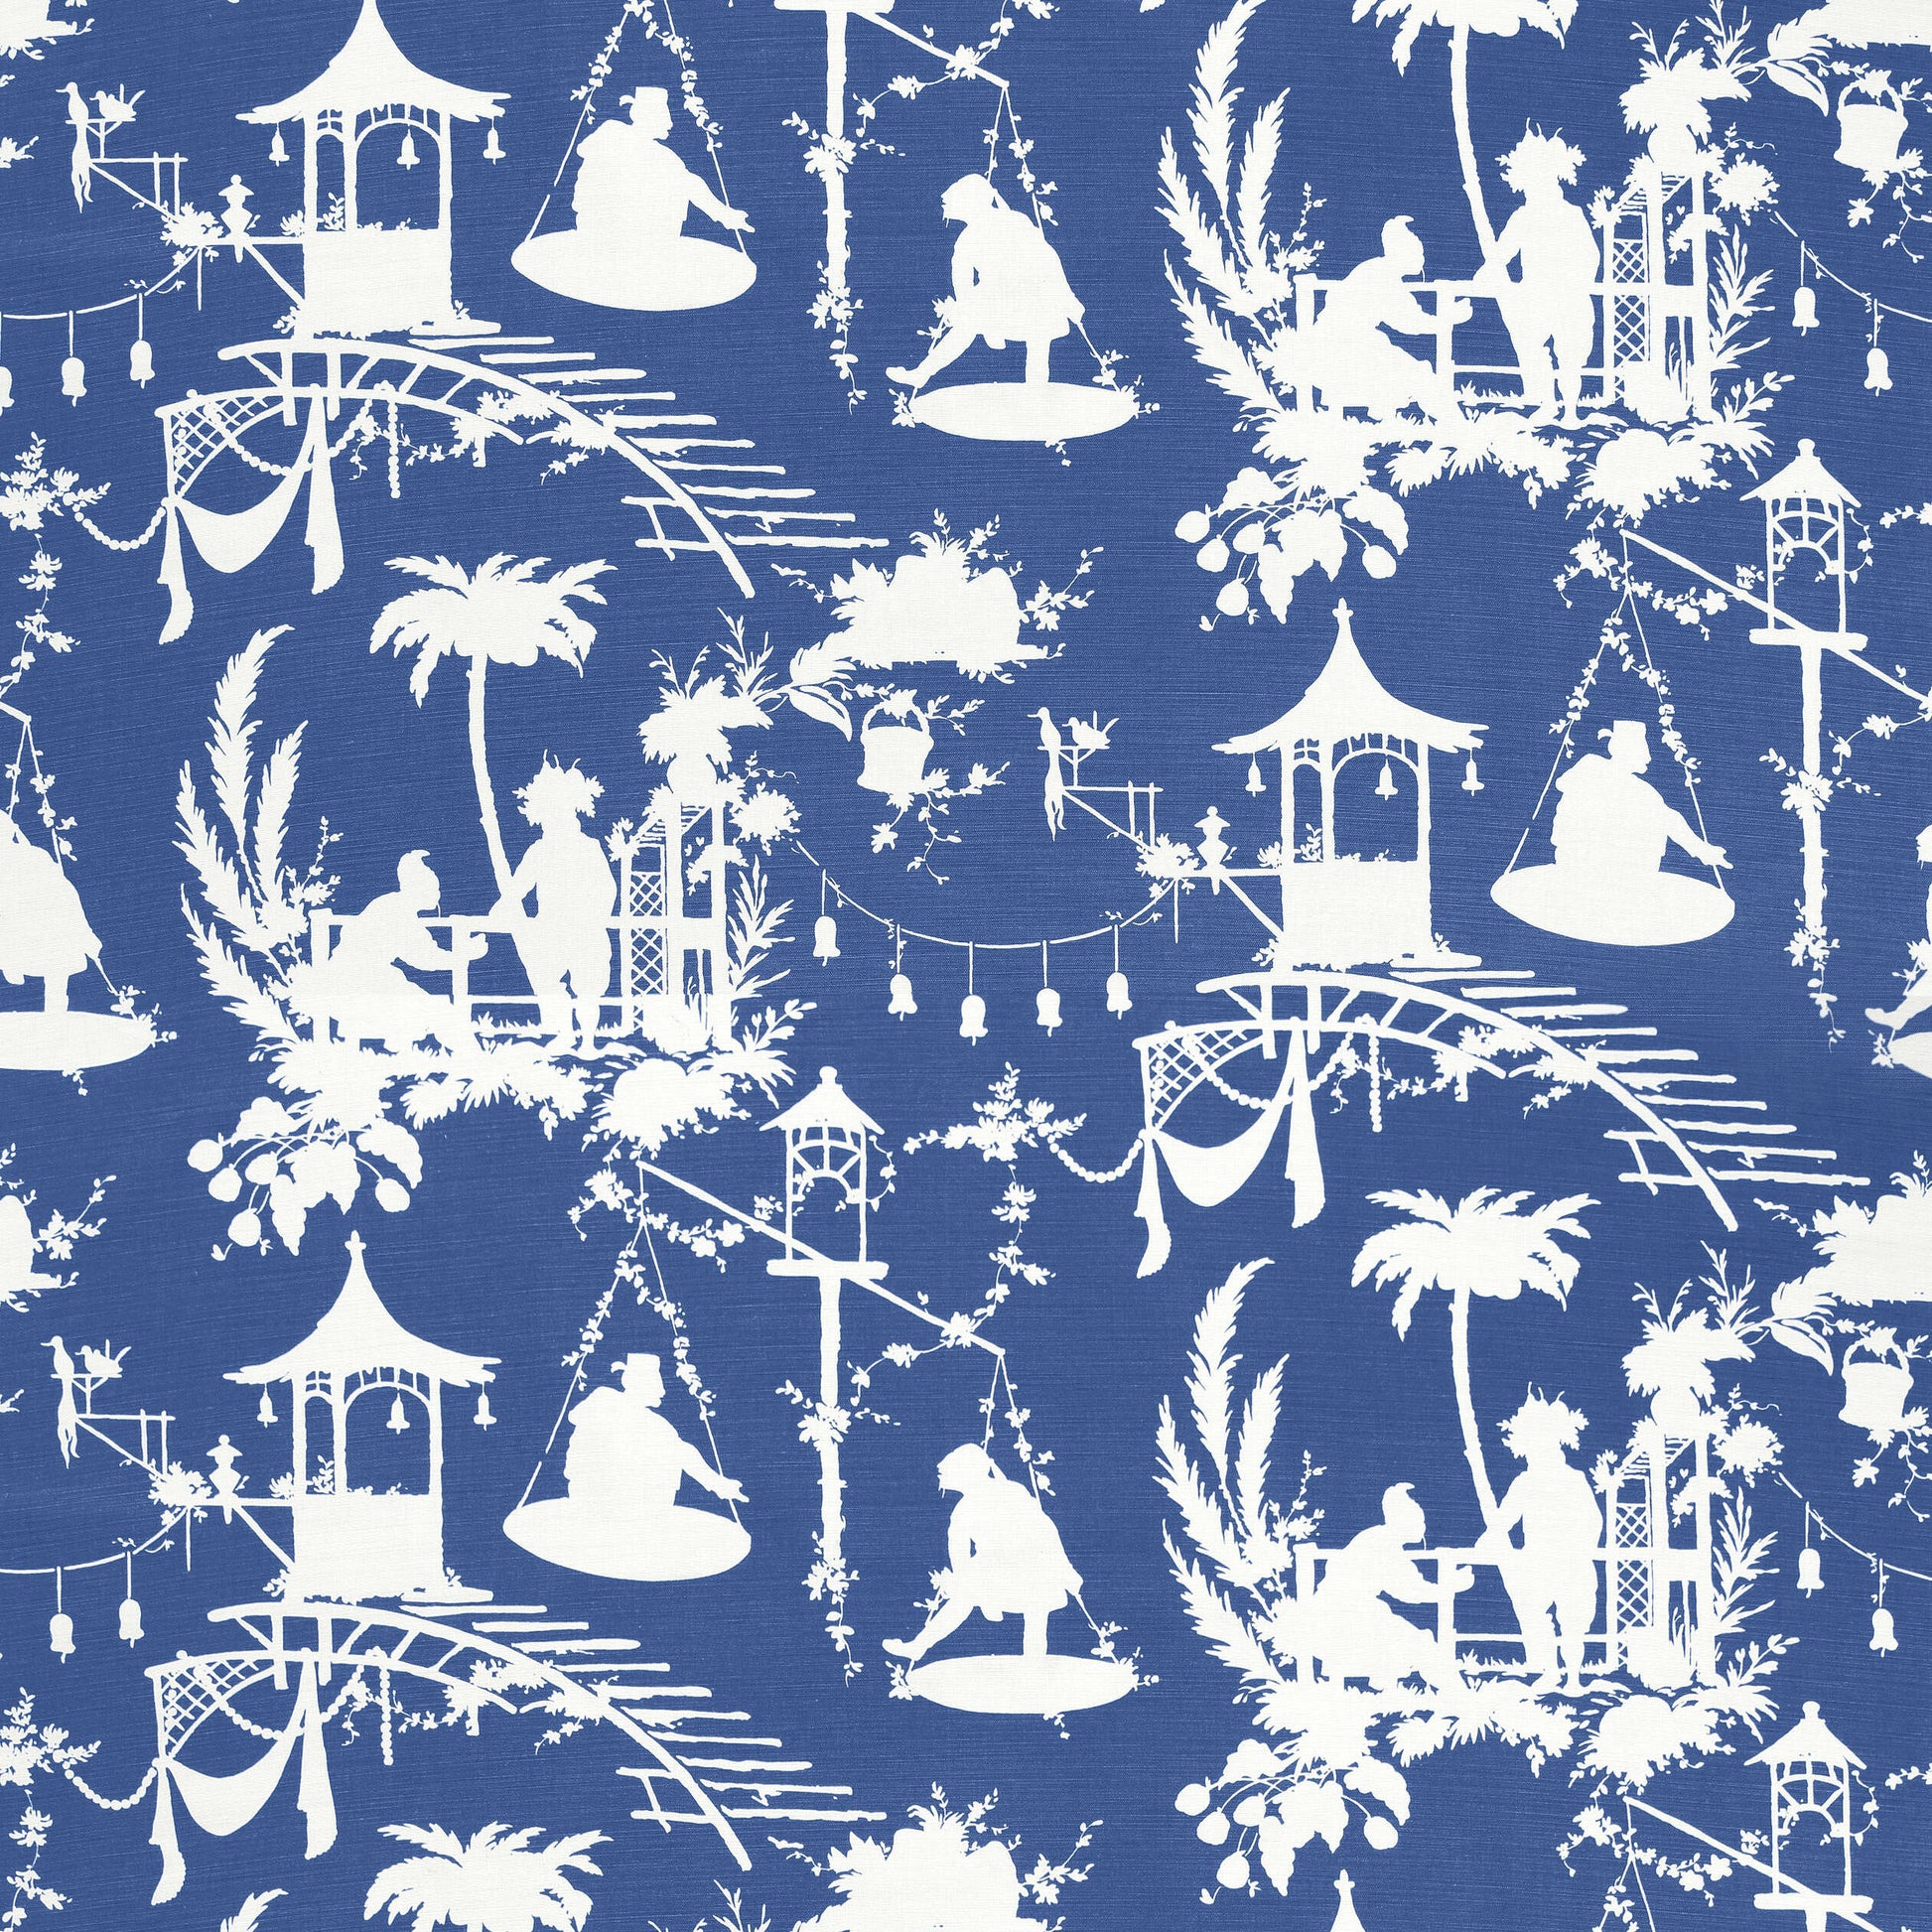 Buy samples of F916020 South Sea Printed Resort Thibaut Fabrics